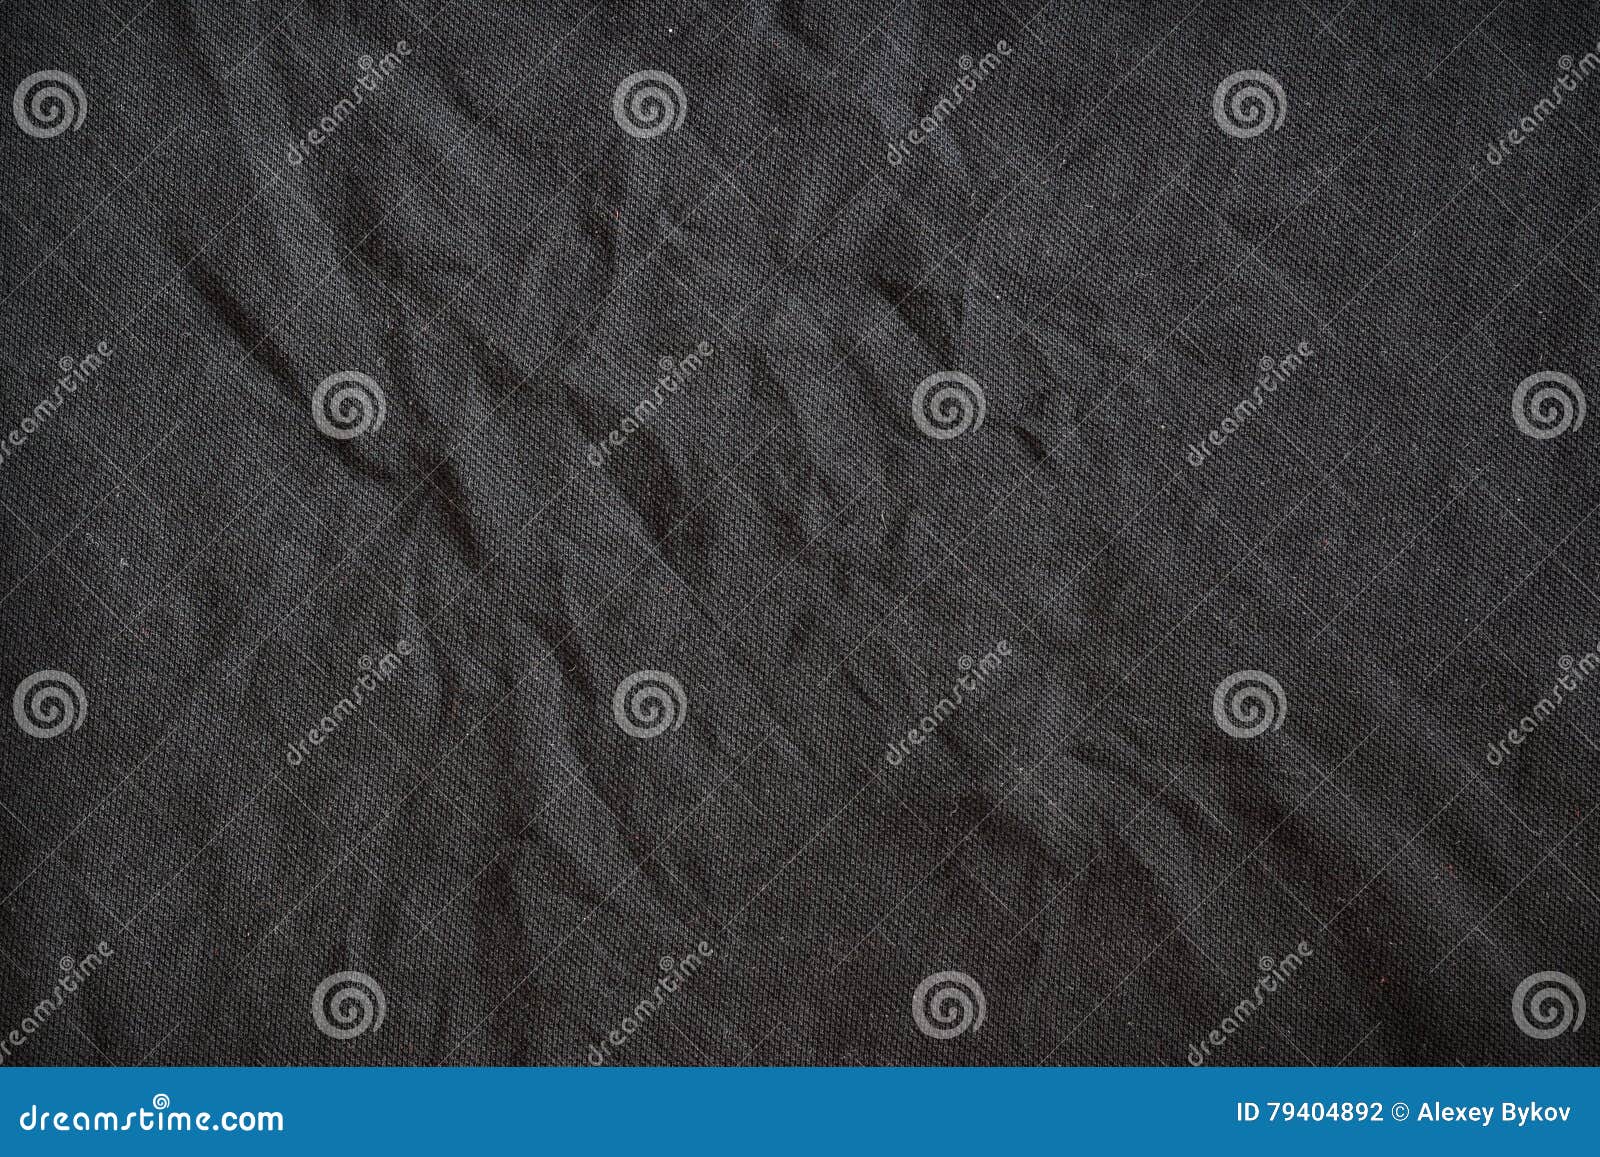 Dark fabric texture. stock photo. Image of pattern, texture - 79404892